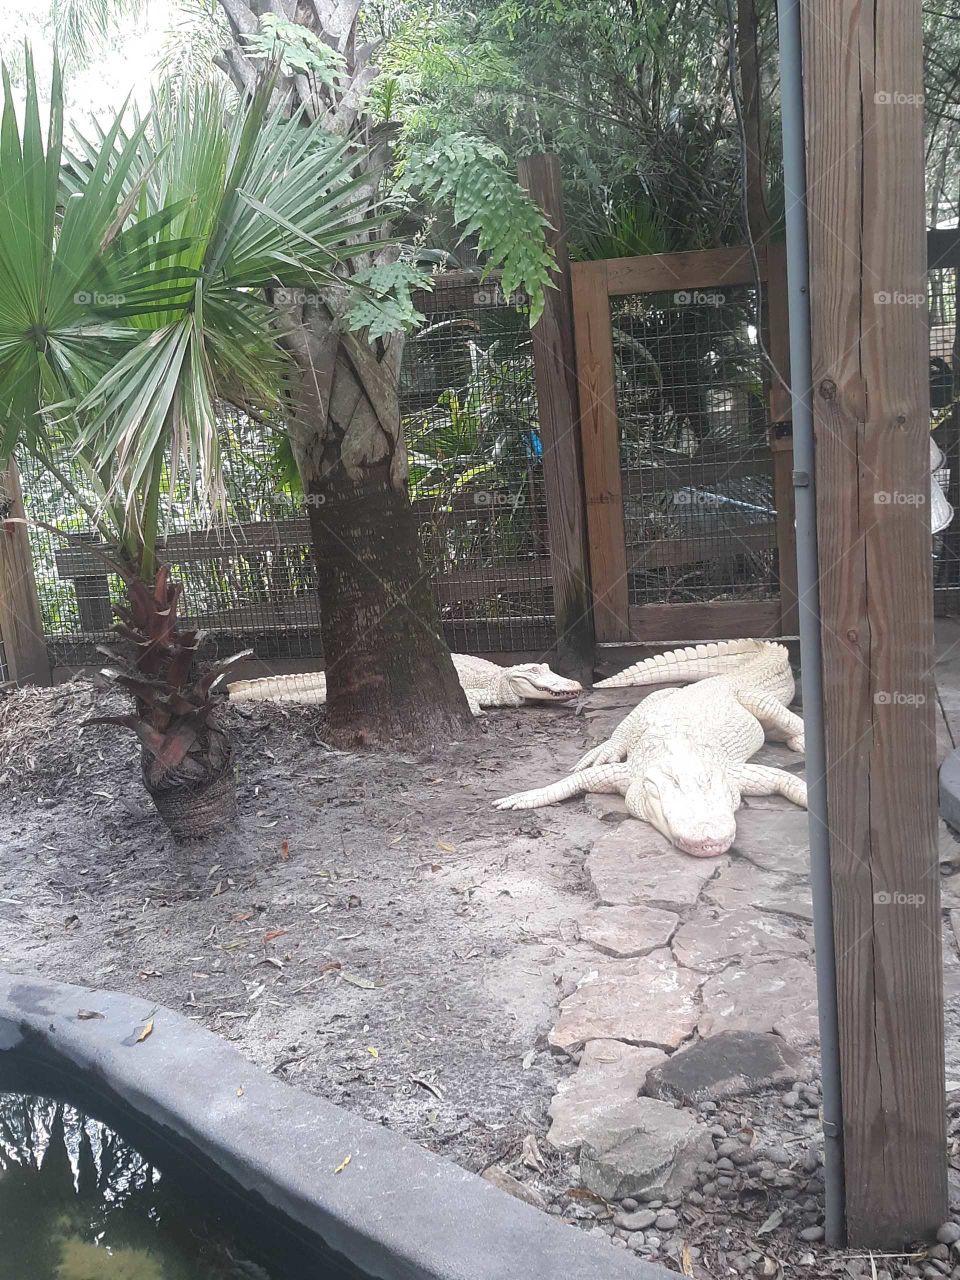 Albino alligators on Wild Florida.